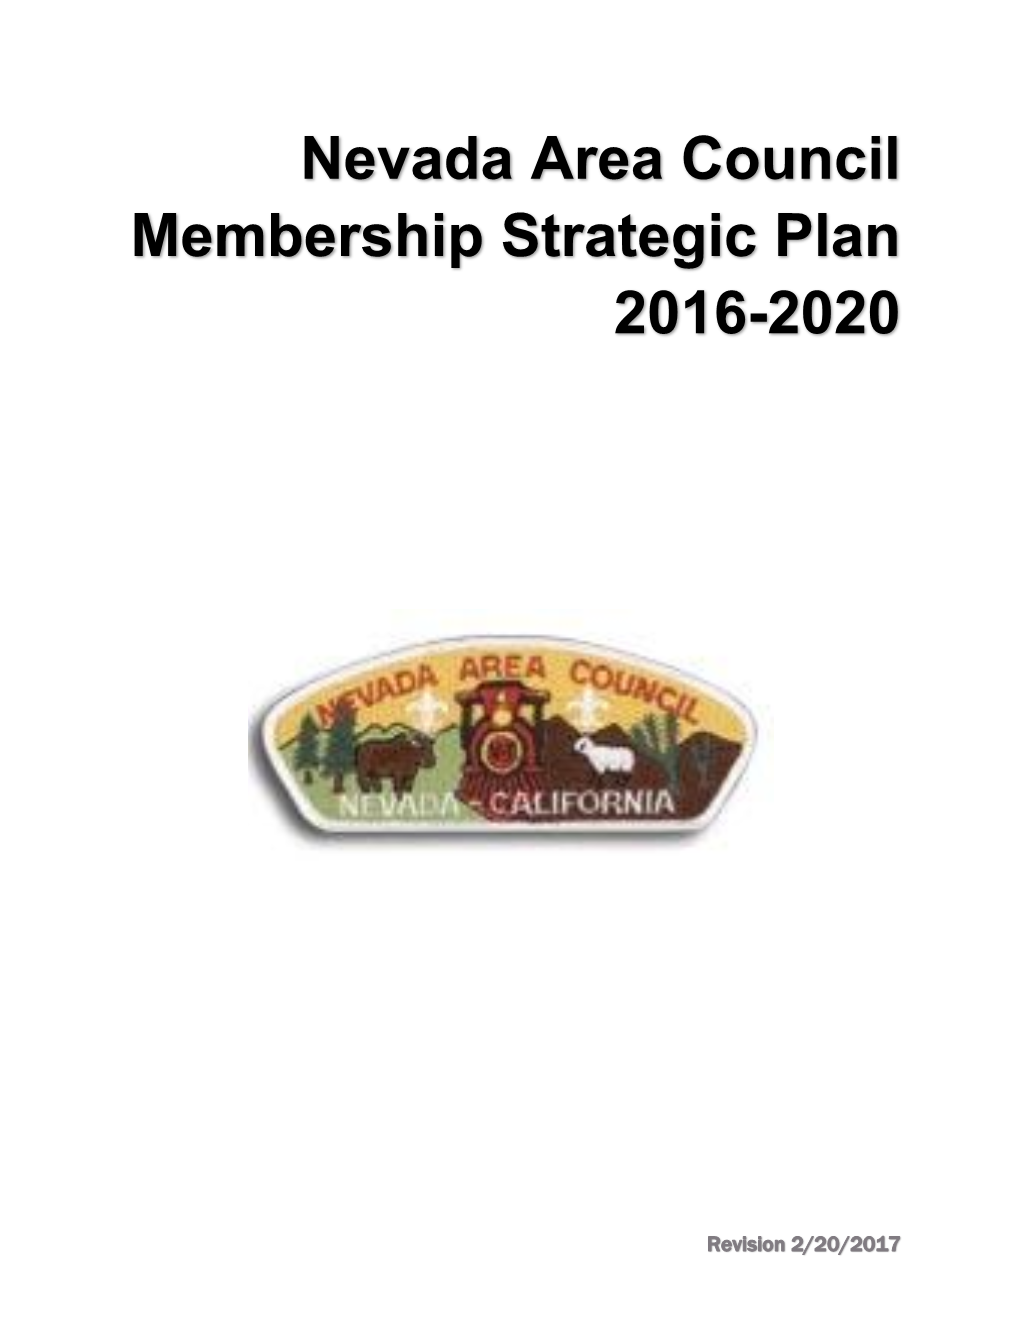 Nevada Area Council Membership Strategic Plan 2016-2020